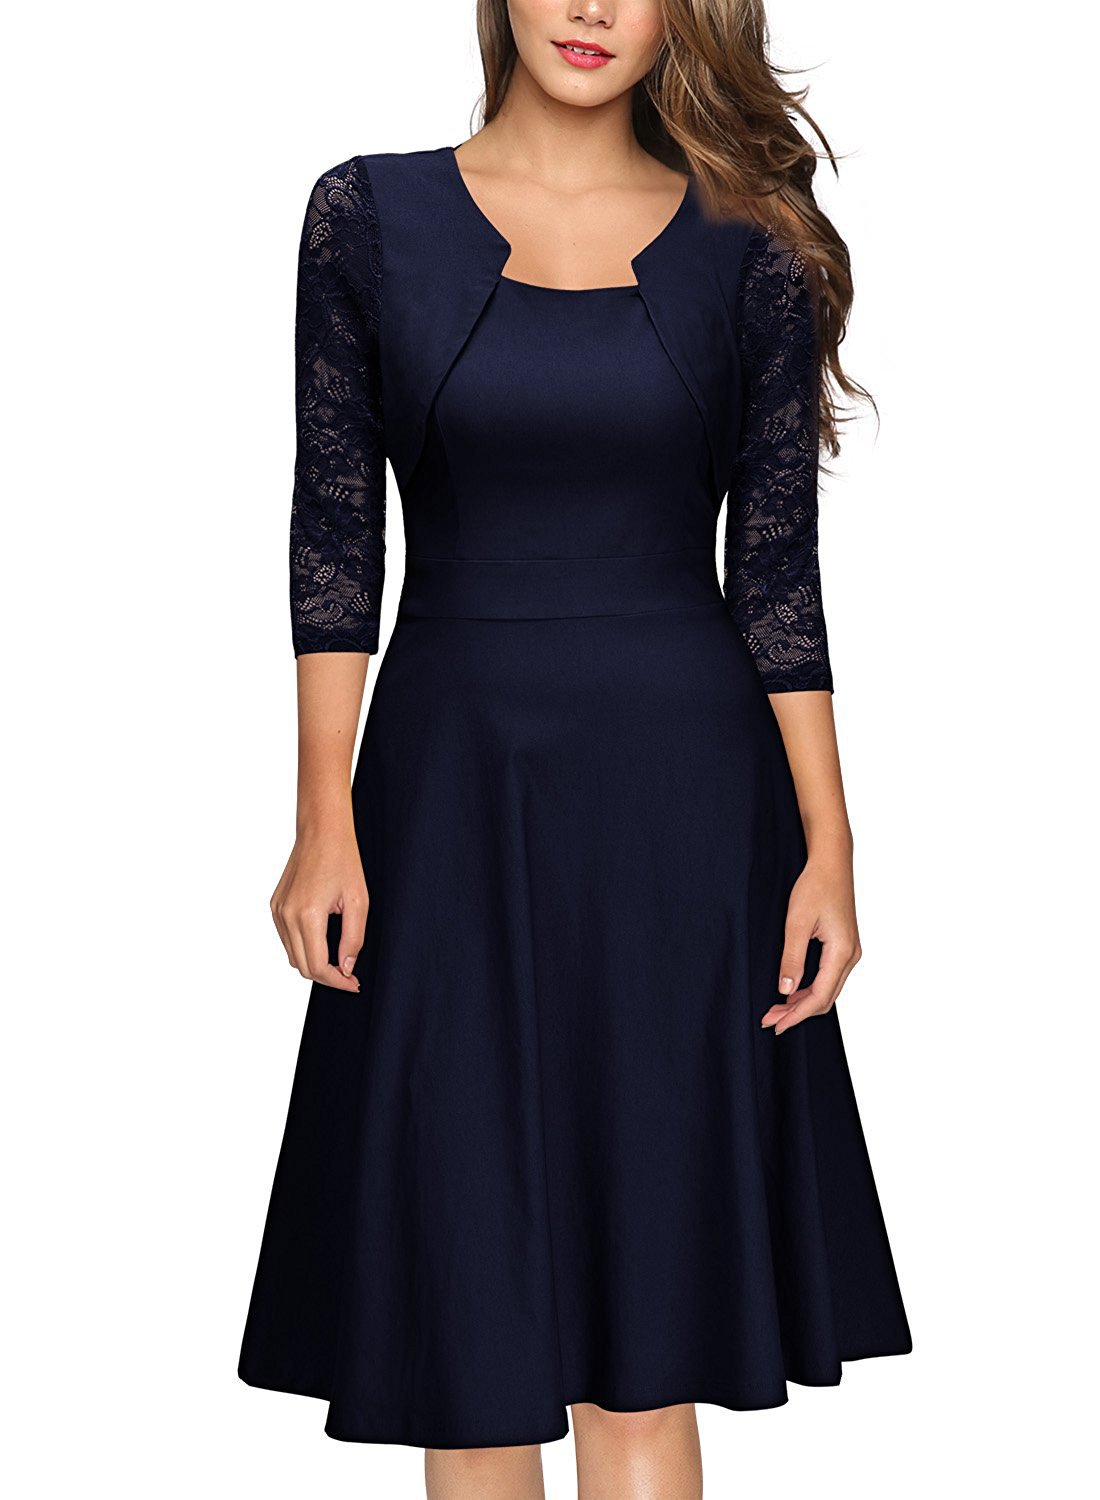 High Quality Three Quarter Sleeve Splice Lace Dress - Black